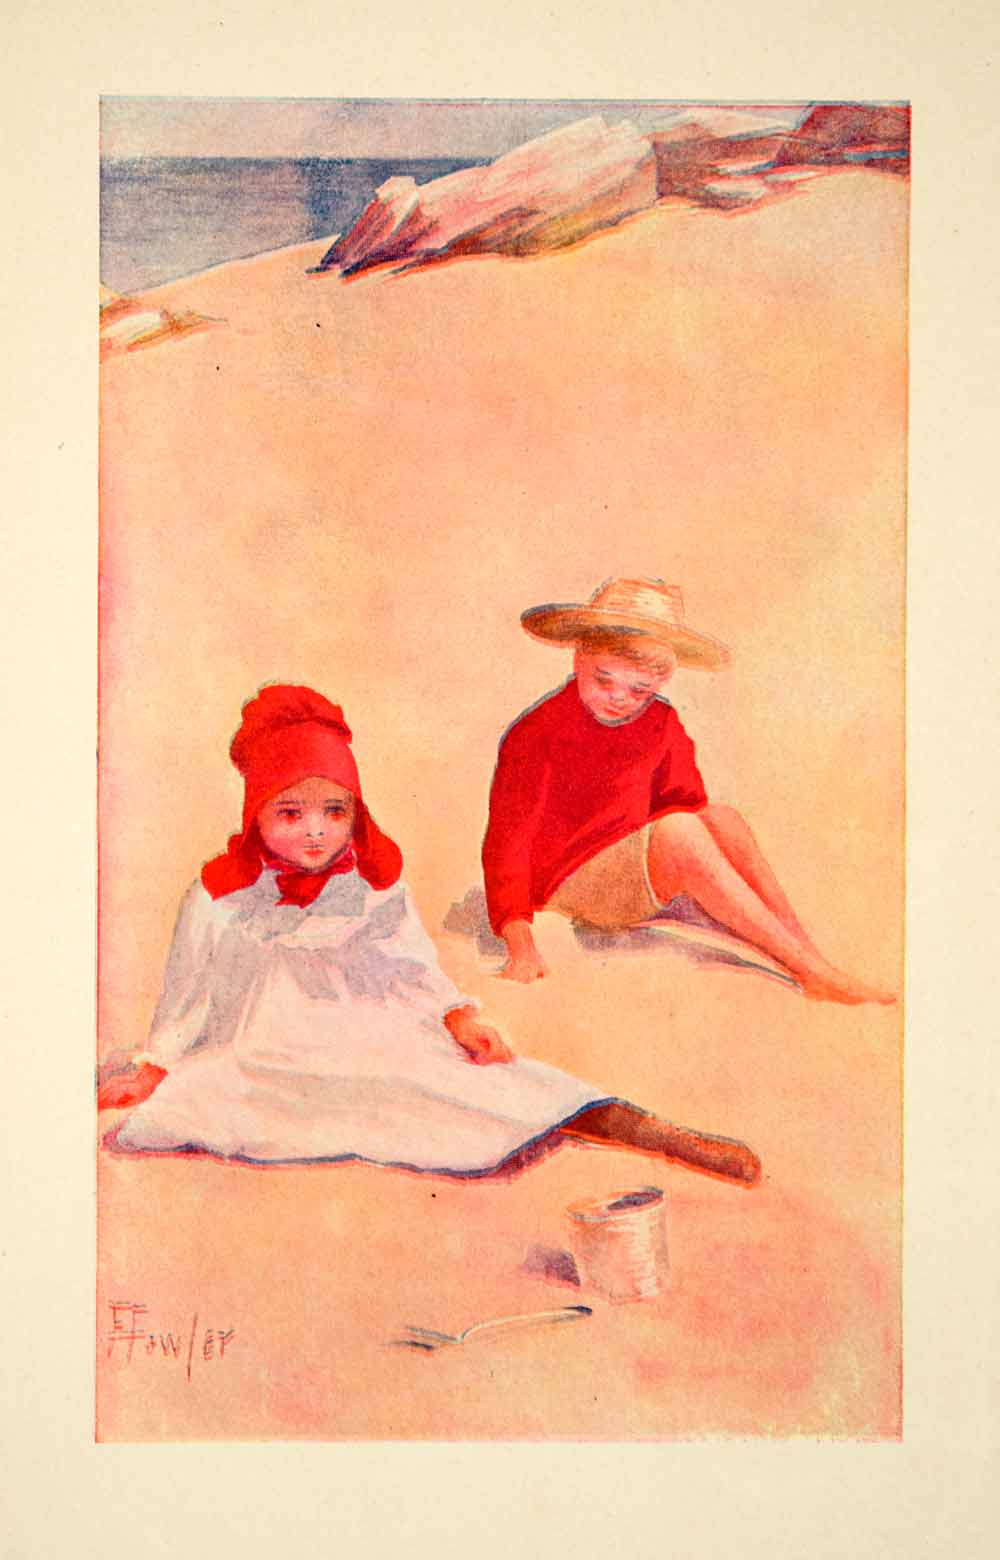 1909 Color Print F Fowler Art Children Kids Beach Ocean Sea Portrait YLF3